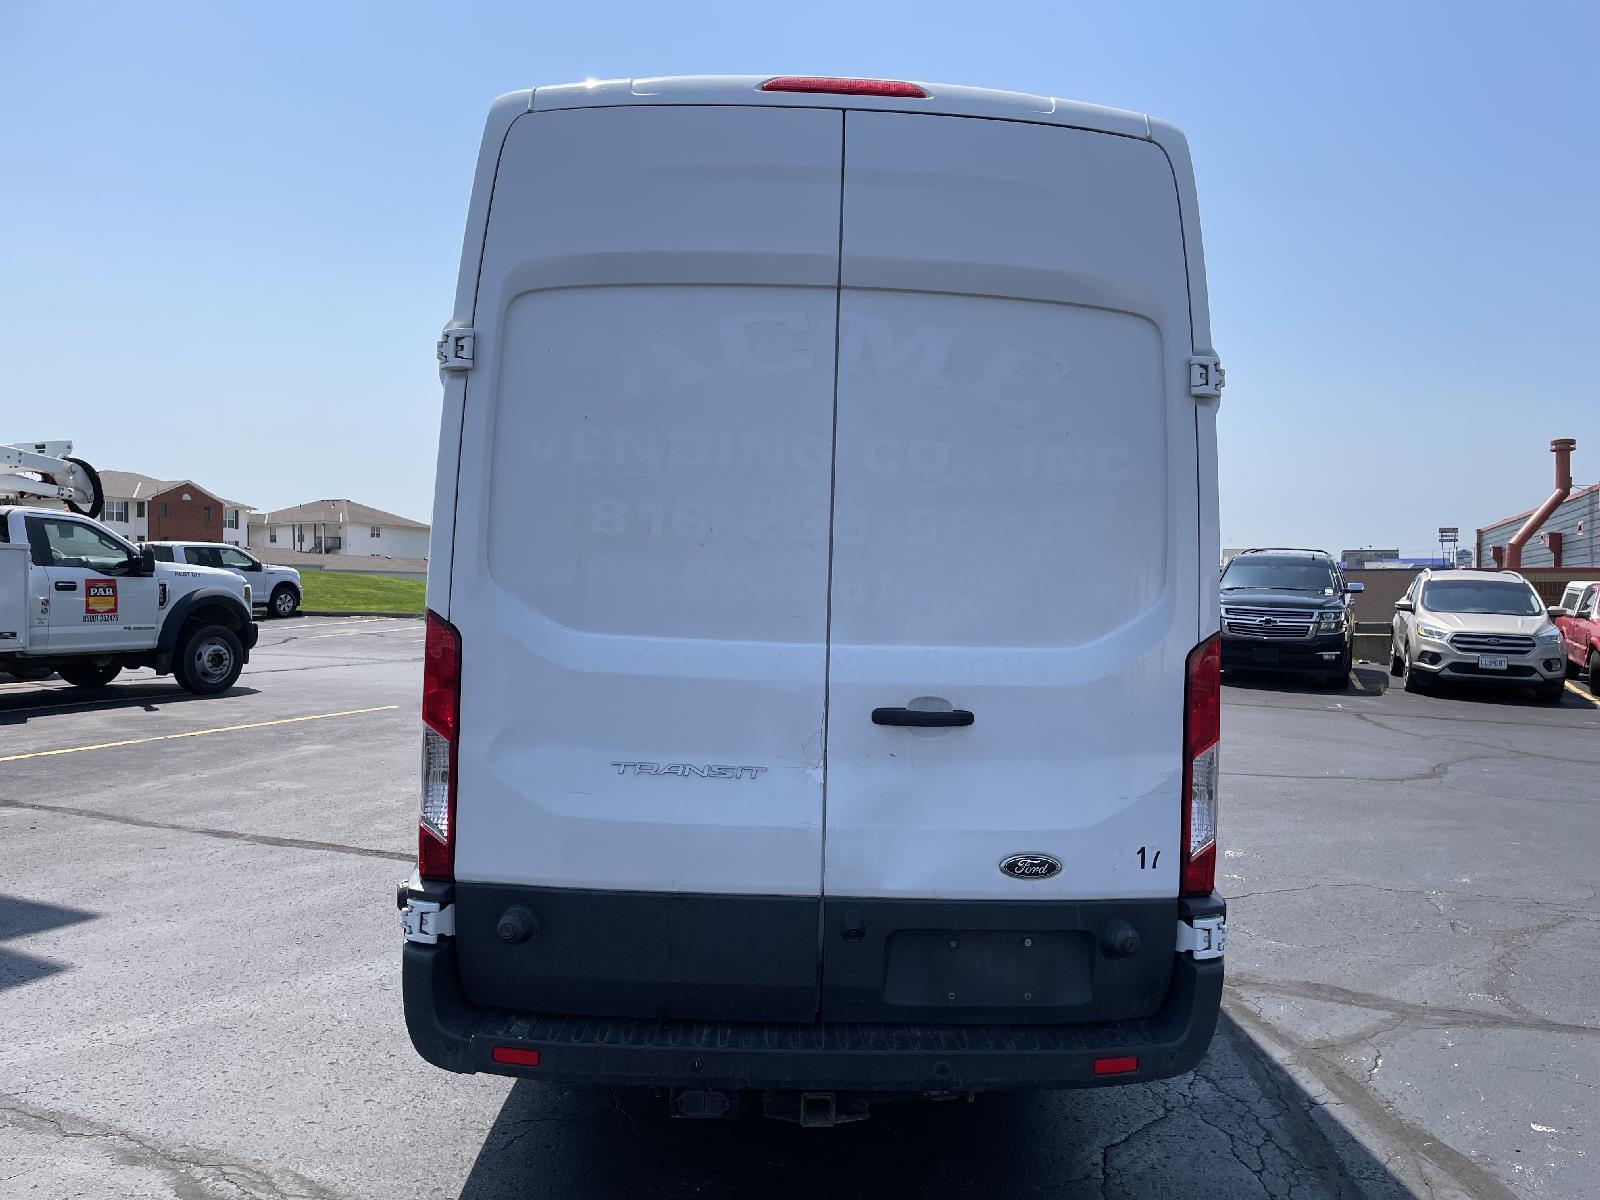 Used 2017 Ford Transit Van  Full-Sized Van for sale in St Joseph MO